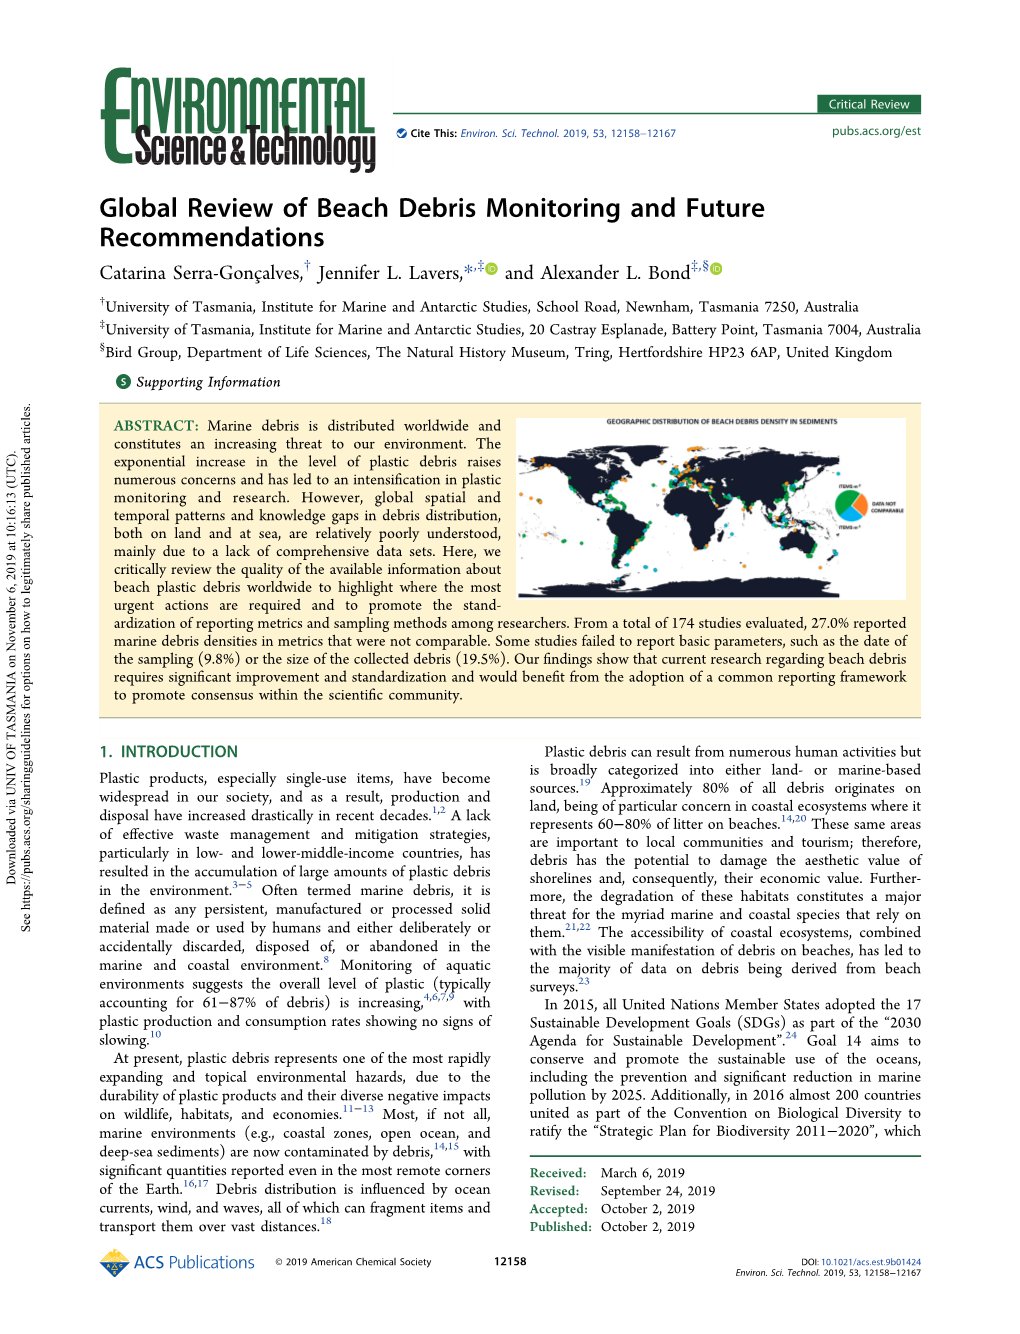 Global Review of Beach Debris Monitoring and Future Recommendations Catarina Serra-Goncalves,̧ † Jennifer L